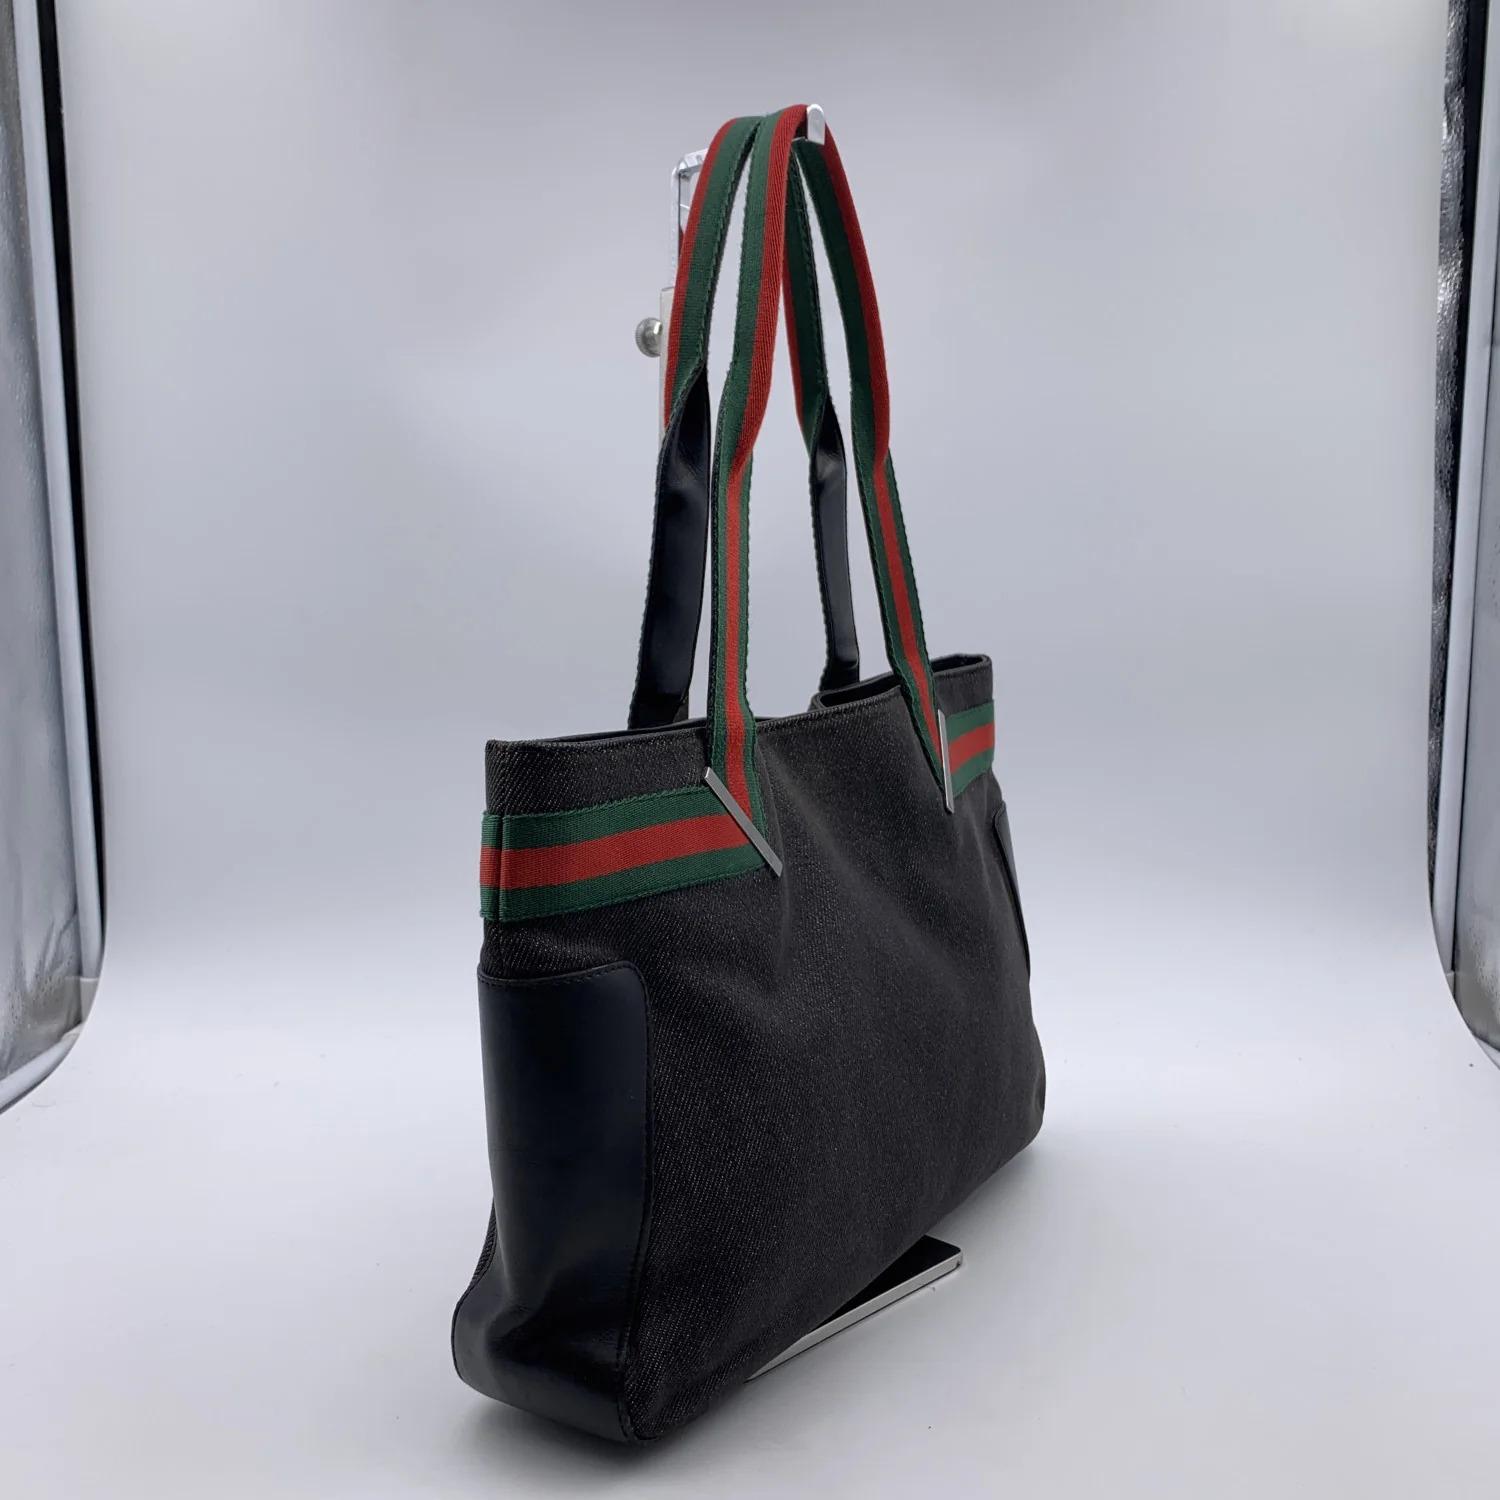 Women's Gucci Black Denim Canvas Shopping Bag Tote Handbag with Stripes